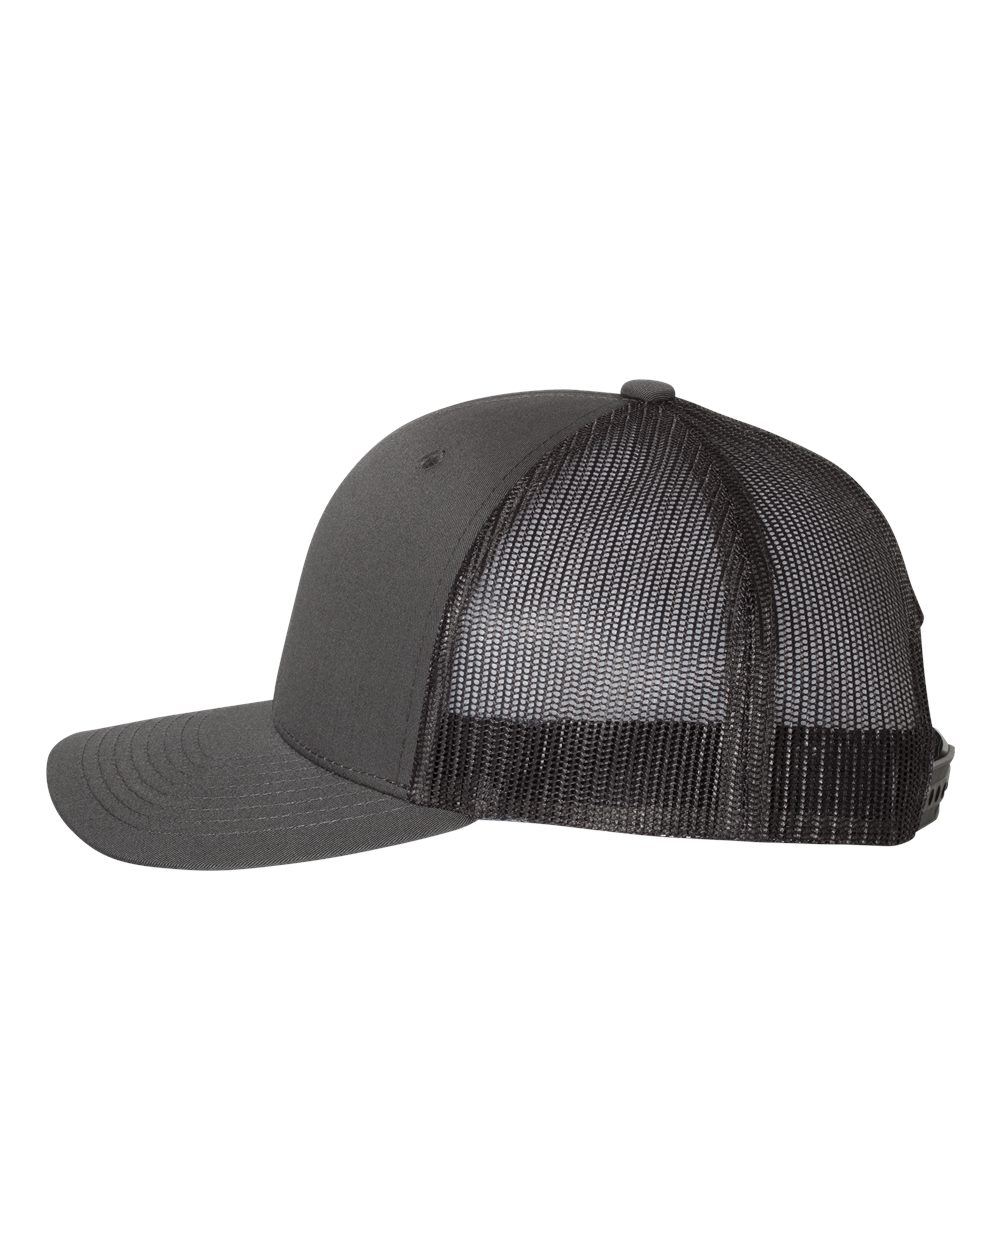 Busch Light Mountain Escape 3D YP Snapback Trucker Hat- Charcoal - Ten Gallon Hat Co.